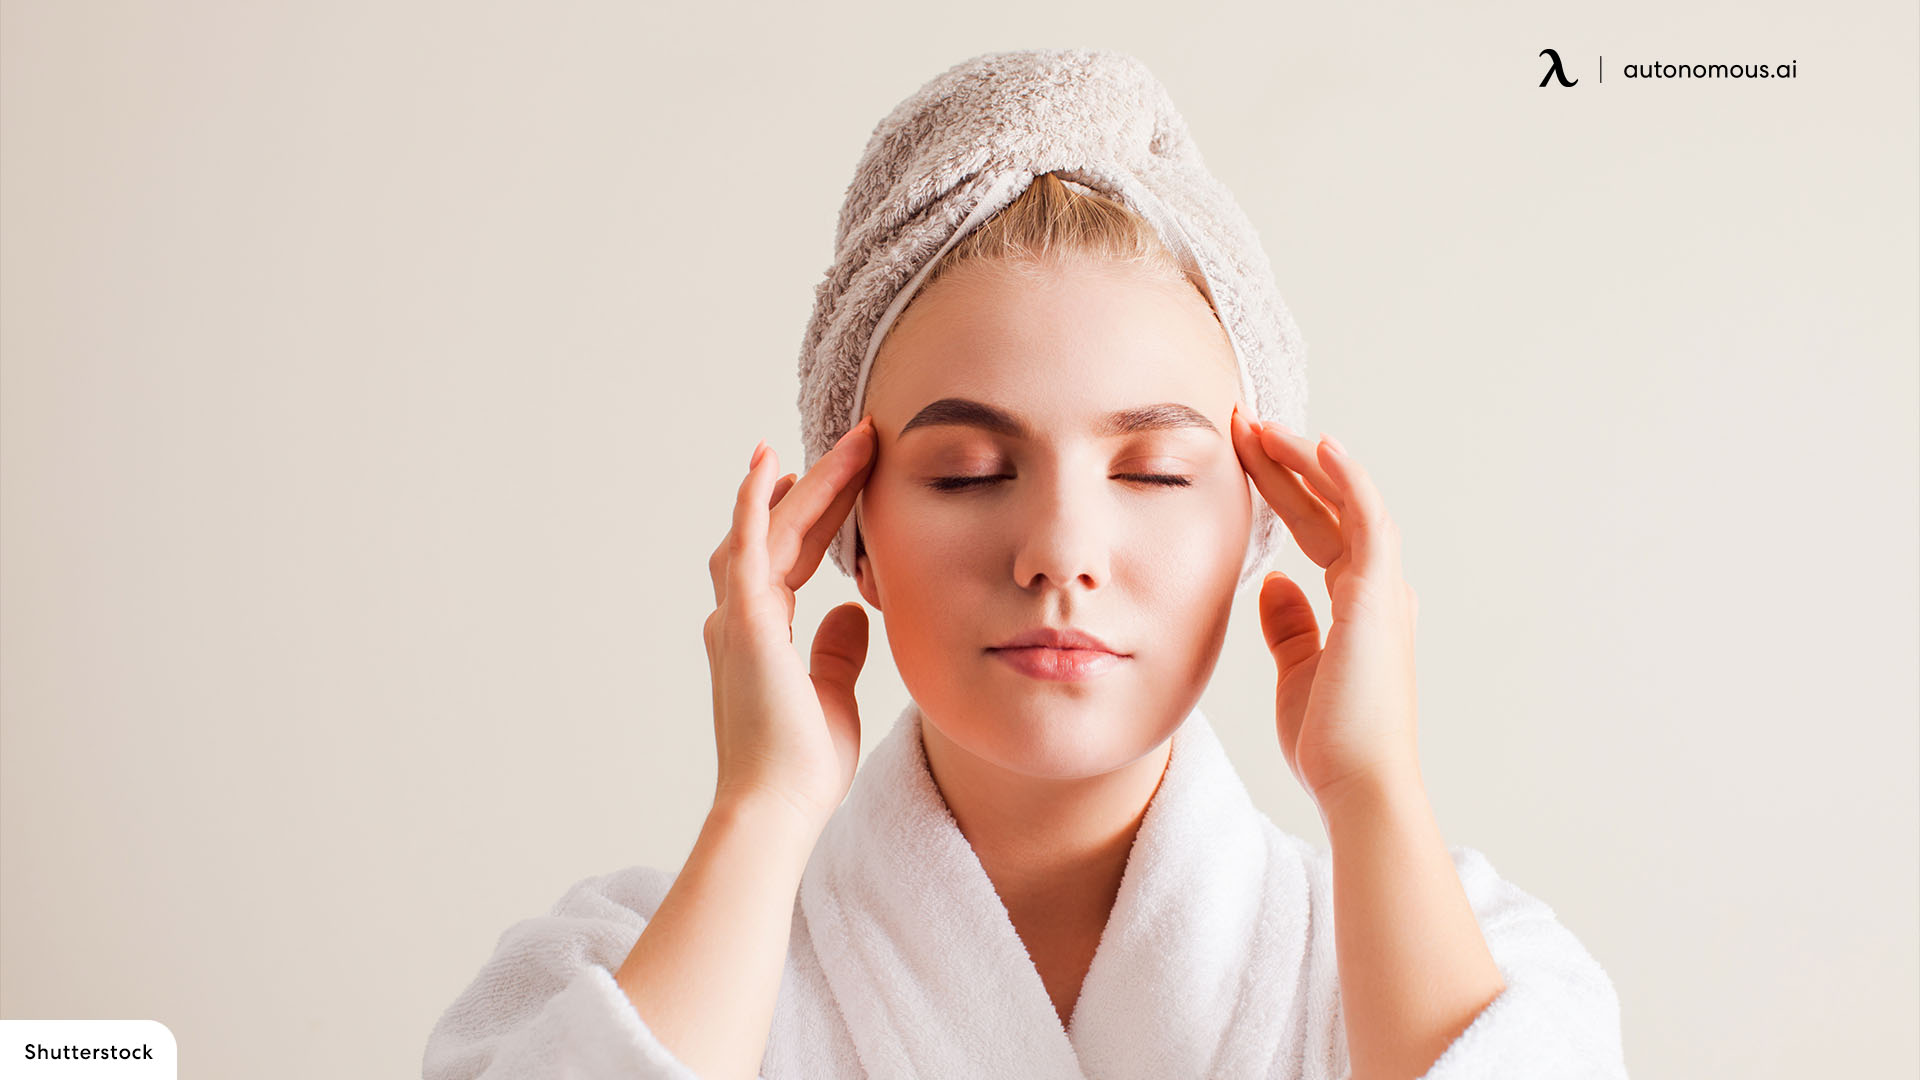 5-minute head massage